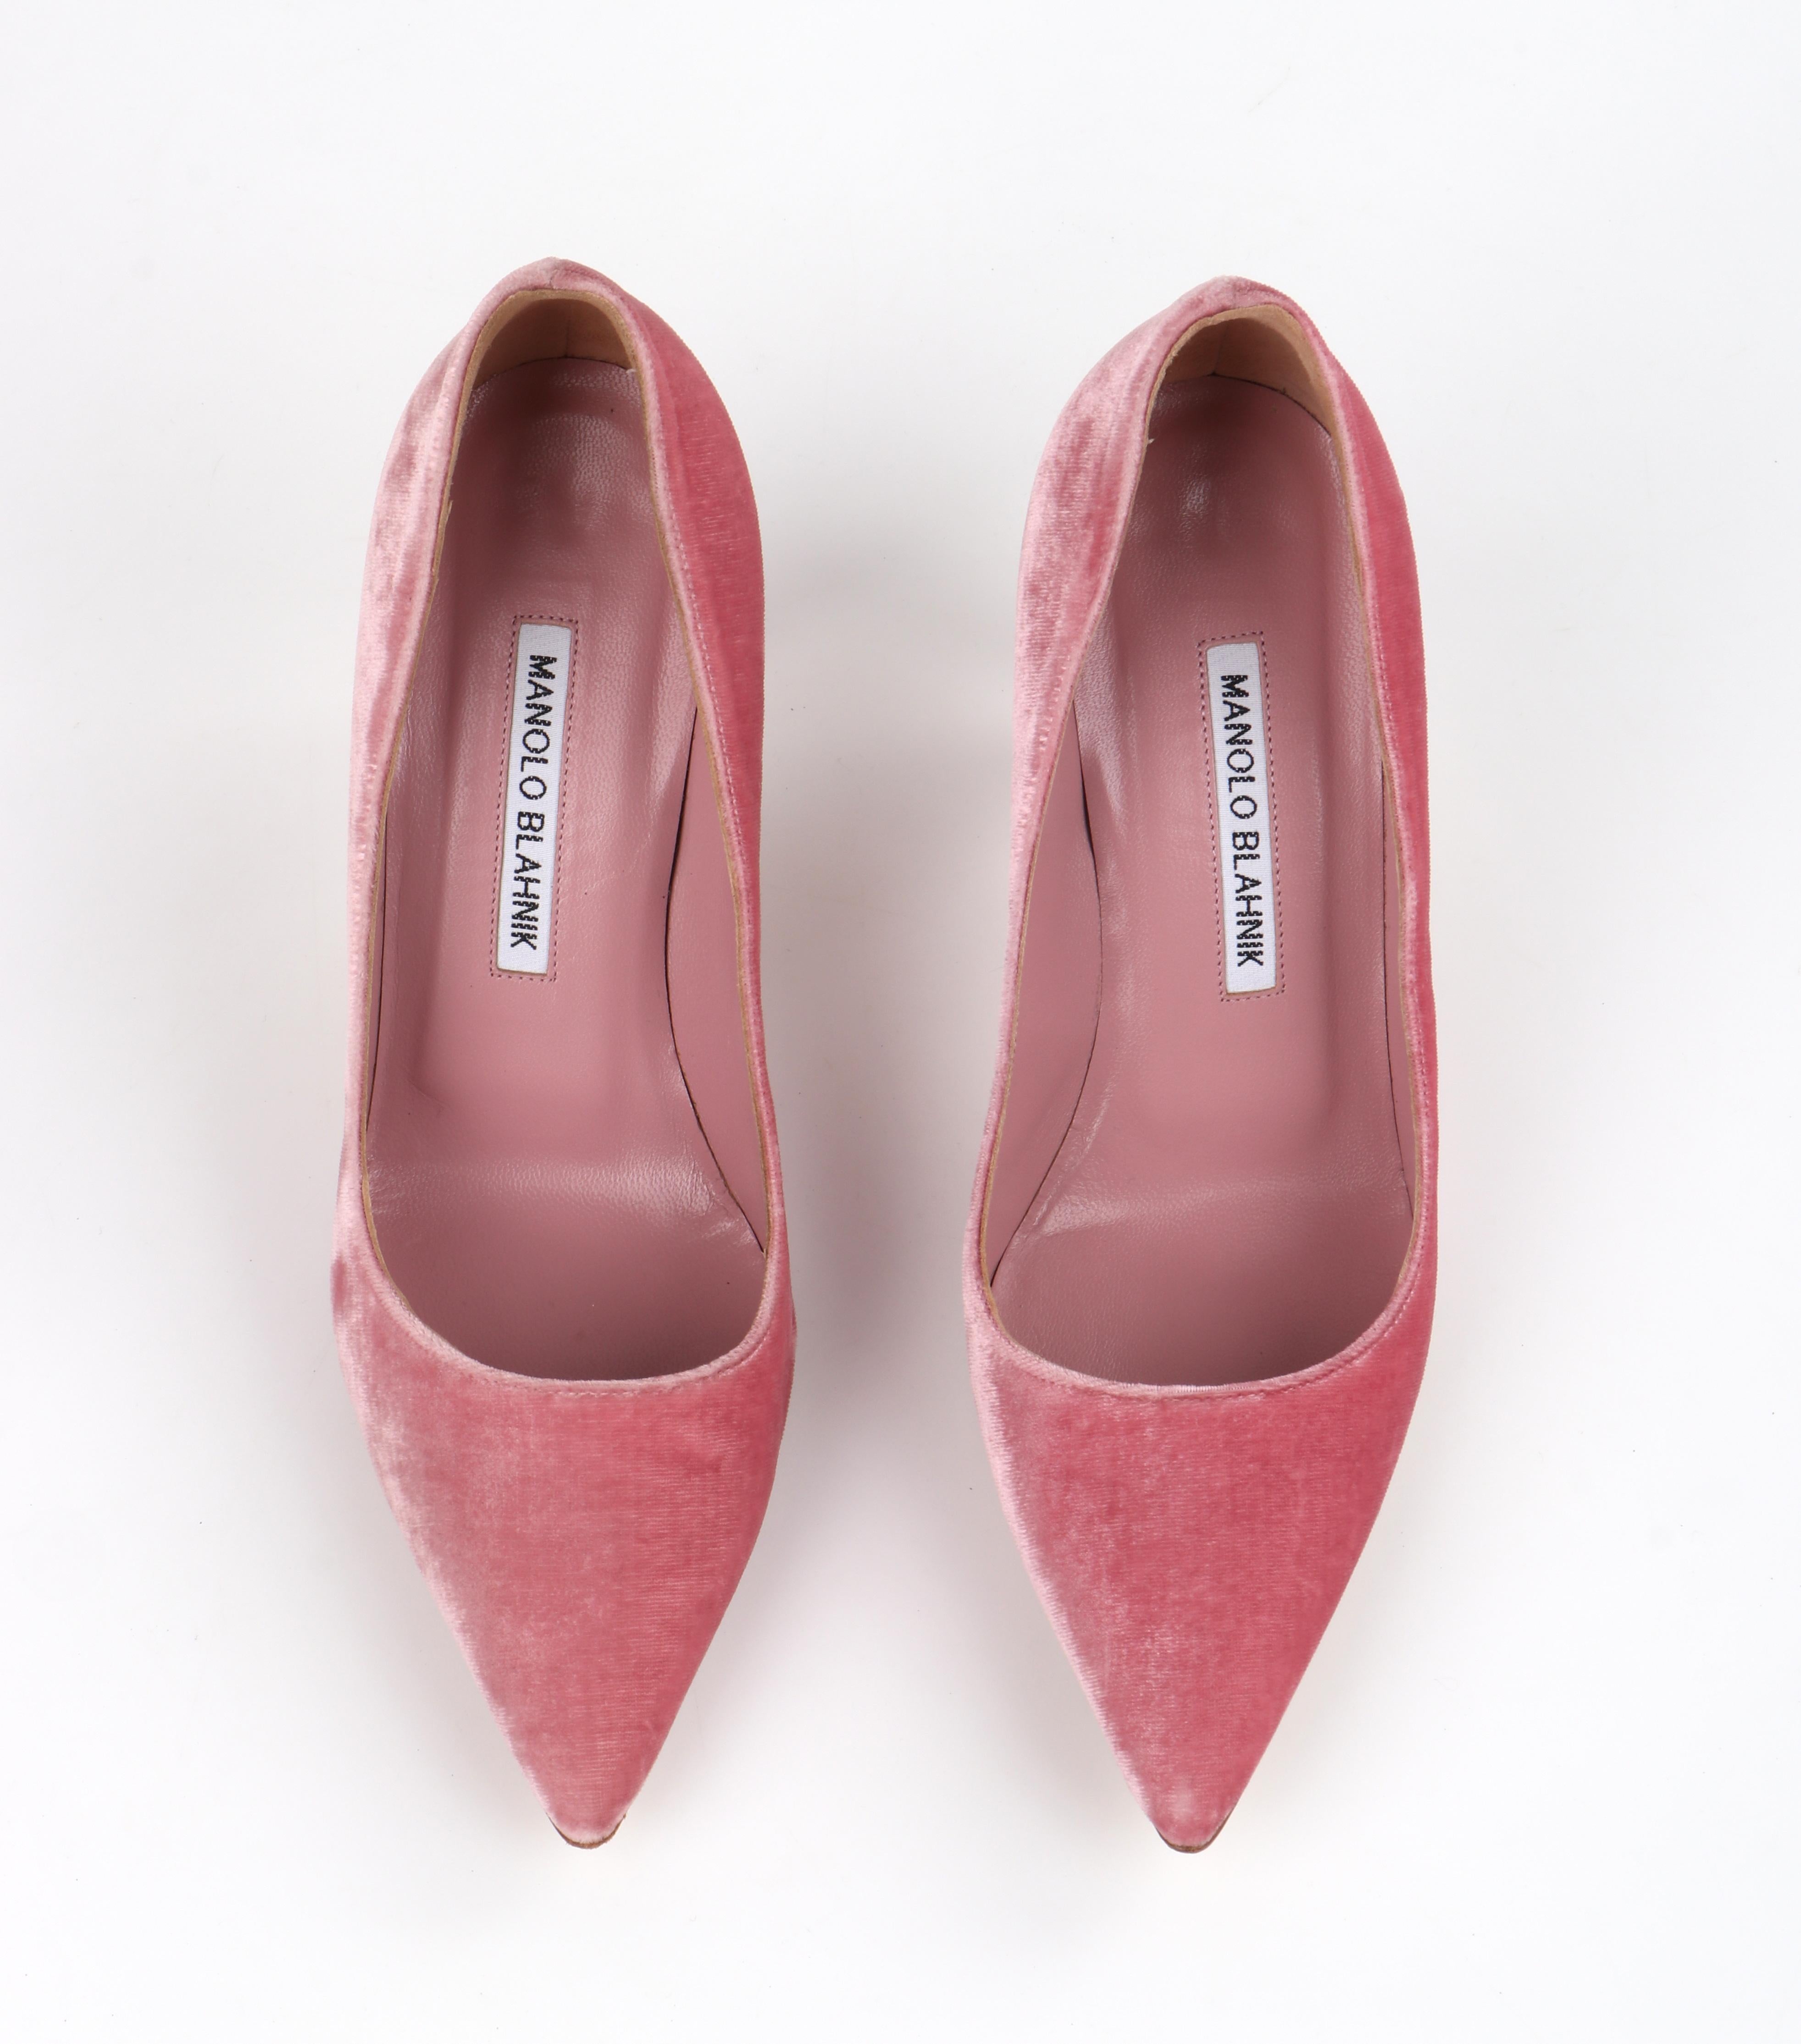 MANOLO BLAHNIK “BB” 90mm Pink Velvet Pointed Toe Covered Heel Stiletto Pumps 2